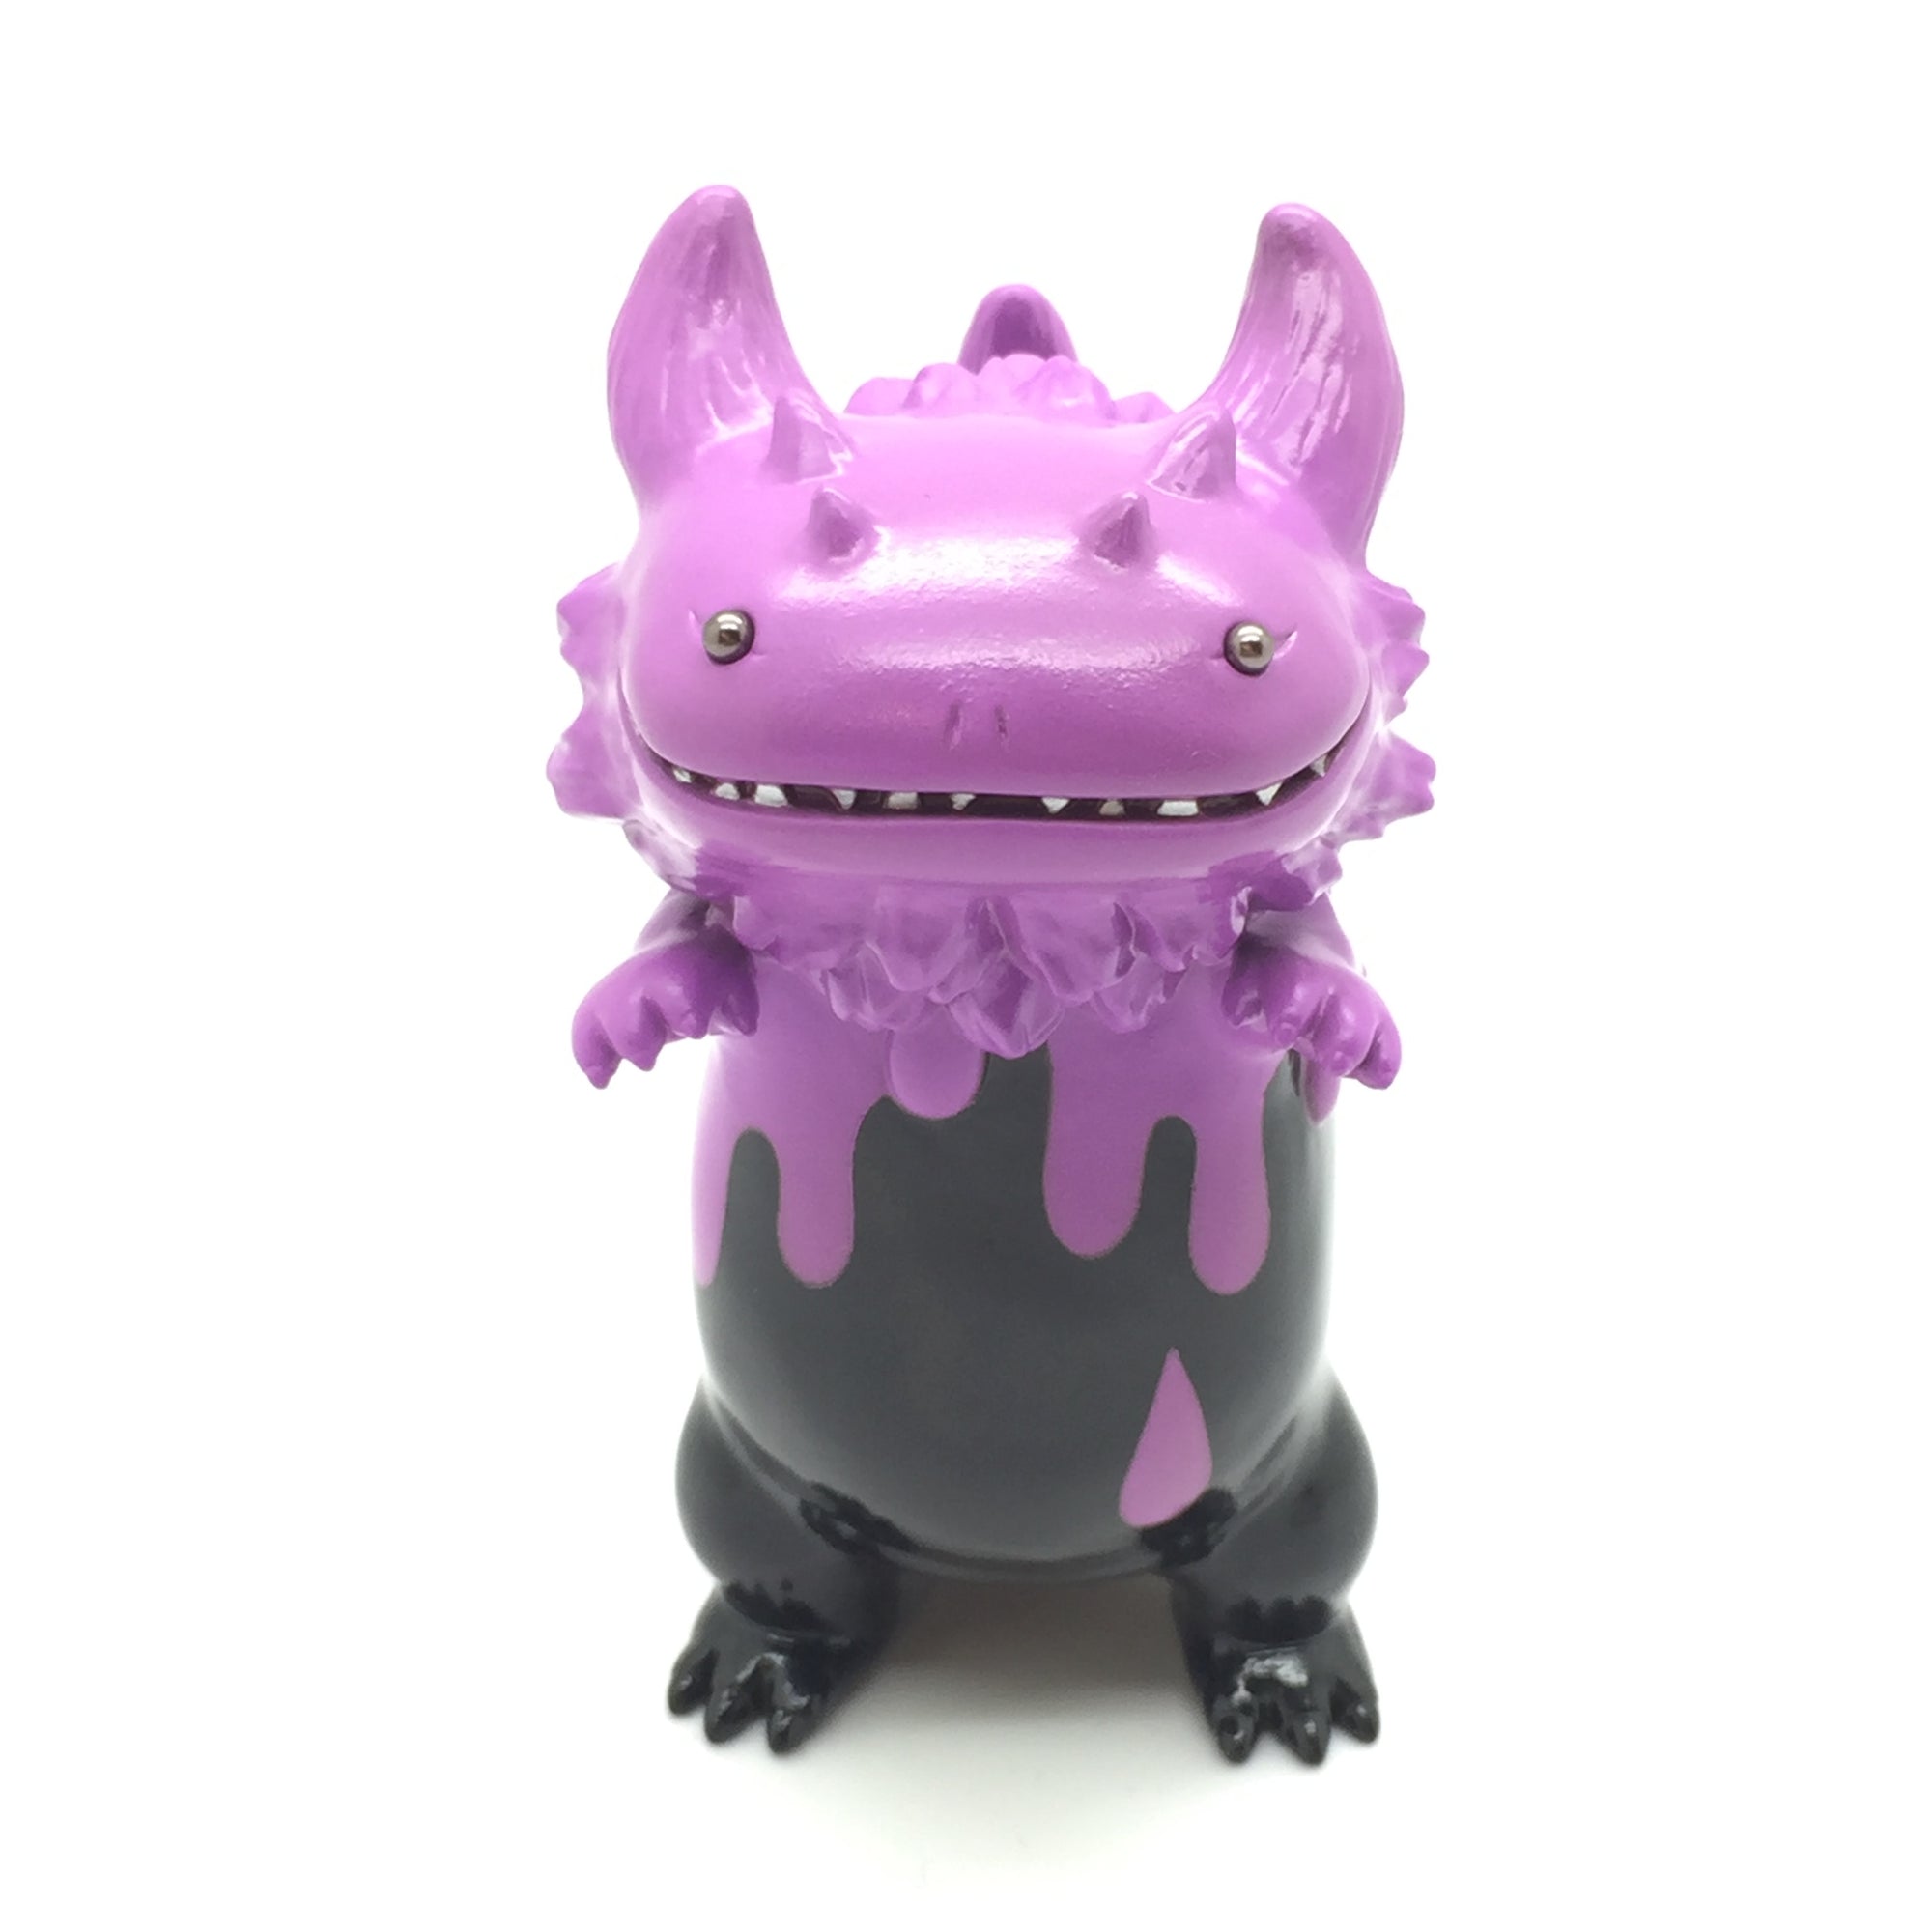 Rangeron Rangeas x Byron Purple/Black Edition Sofubi Toy by T9G x Shoko Nakazawa